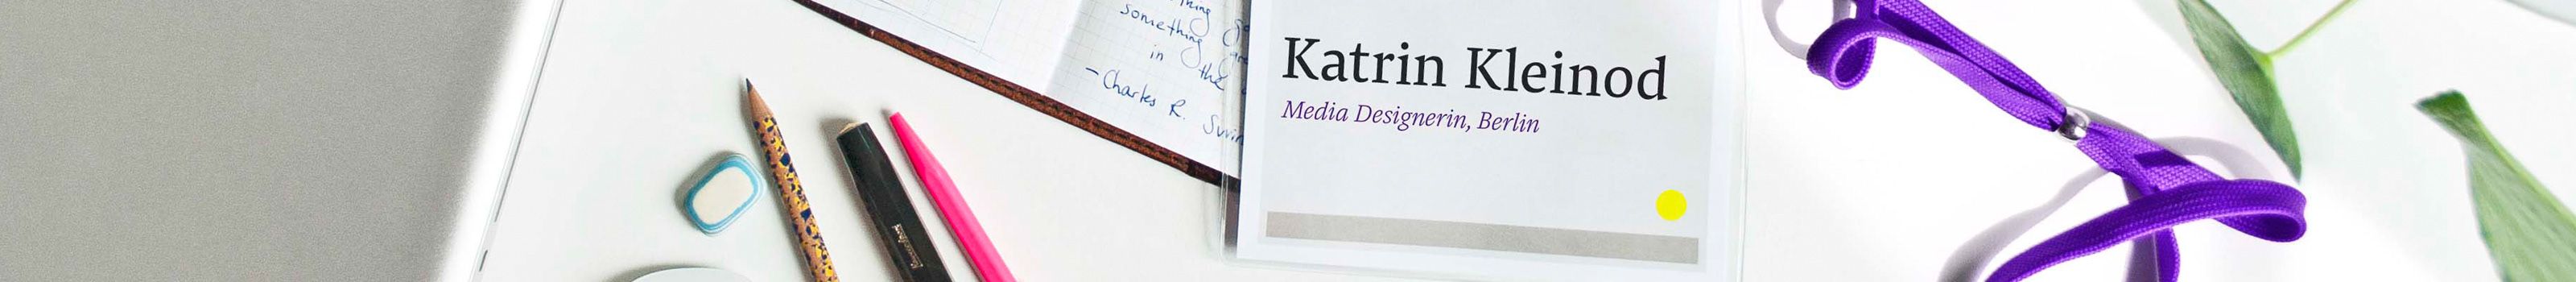 Katrin Kleinod's profile banner